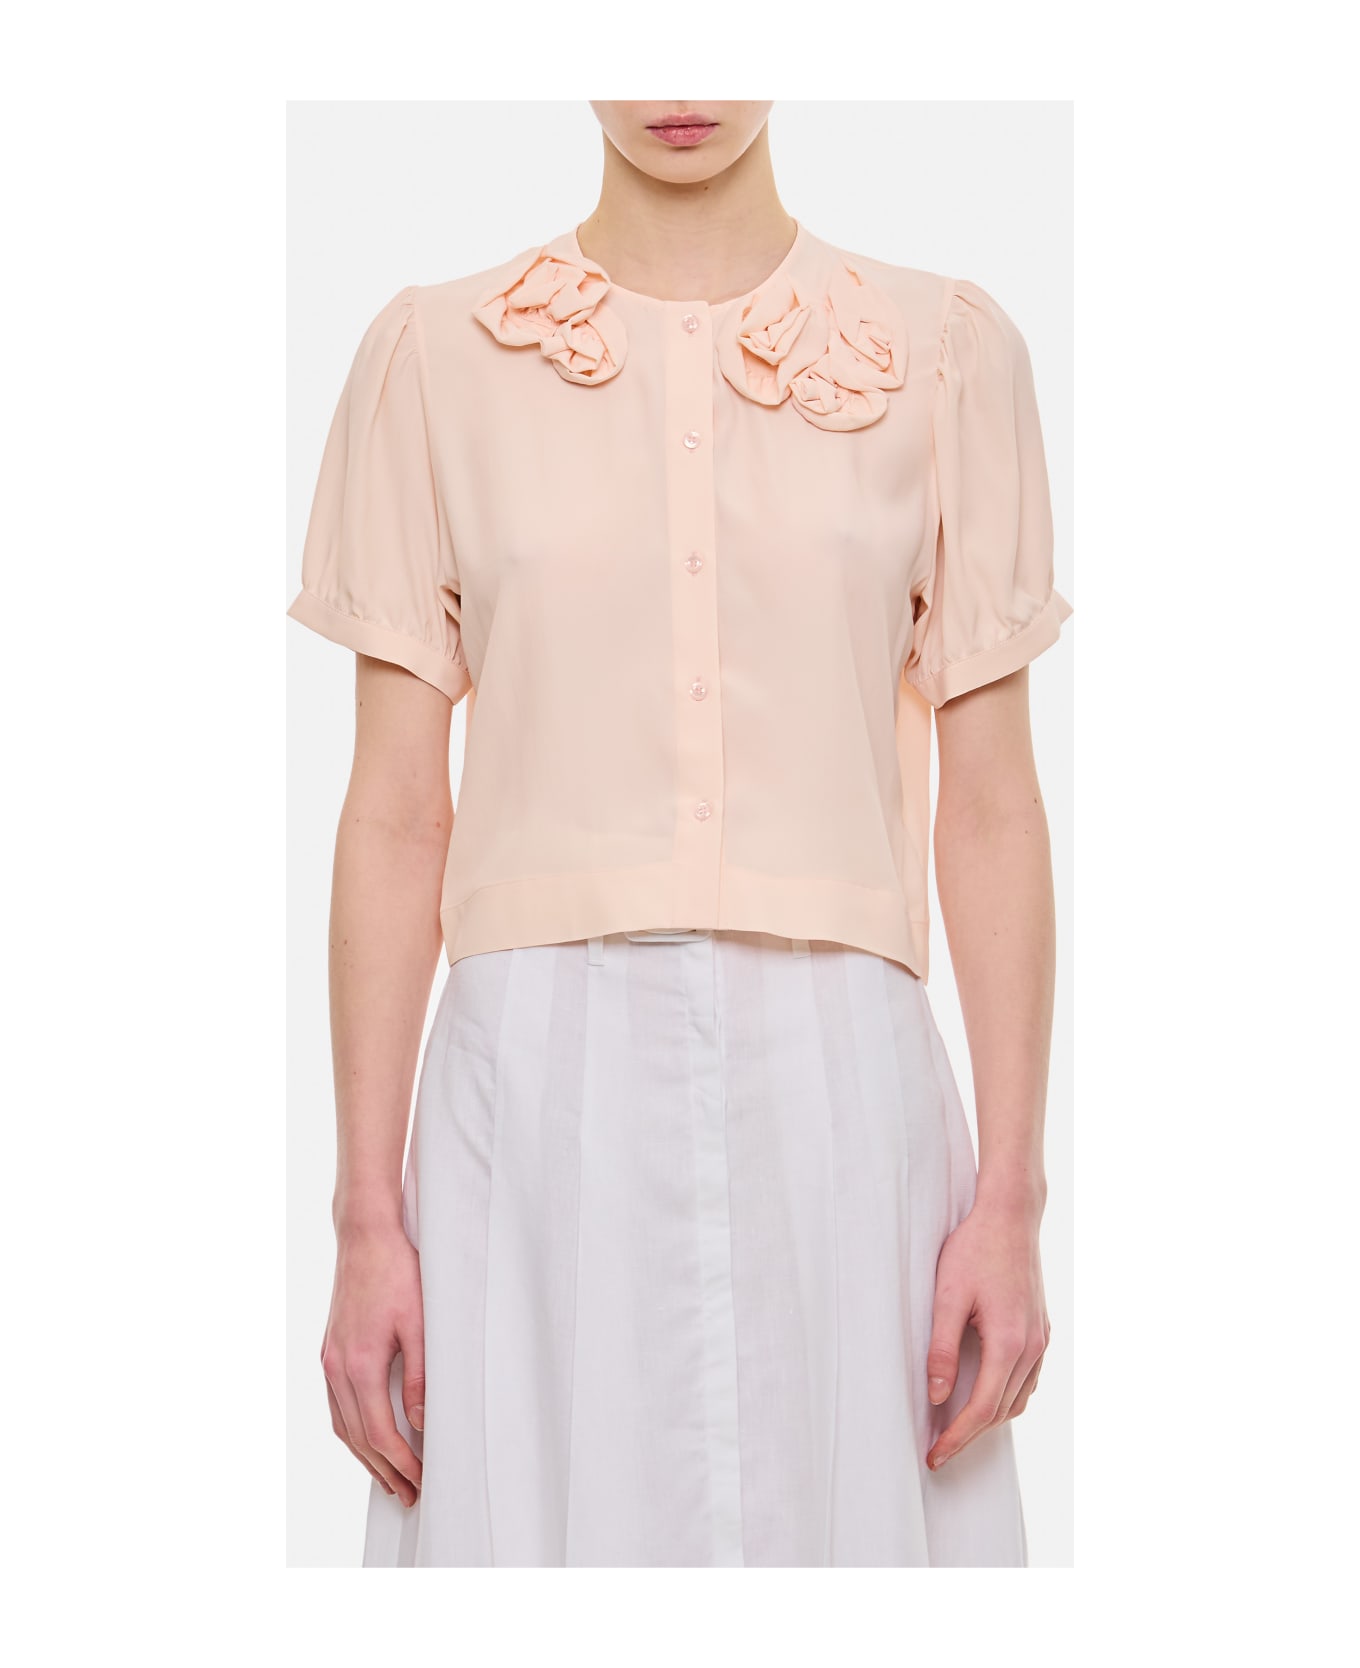 Simone Rocha Short Sleeve Top W/ Clustered Rose - Pink スカート